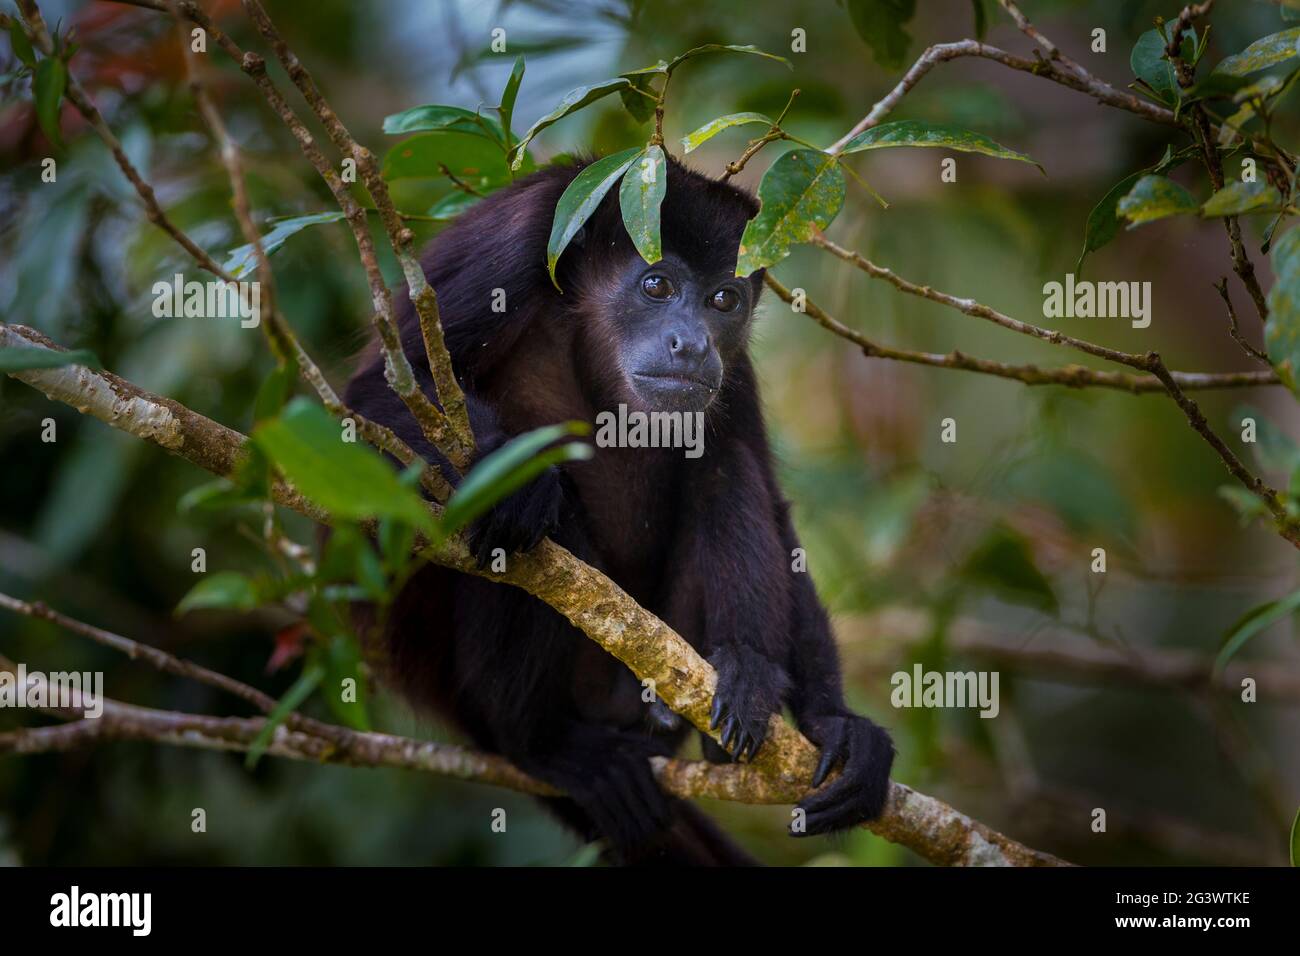 Panama wildlife with a Mantled Howler Monkey, Alouatta palliata, in the rainforest of Soberania national park, Colon province, Republic of Panama. Stock Photo